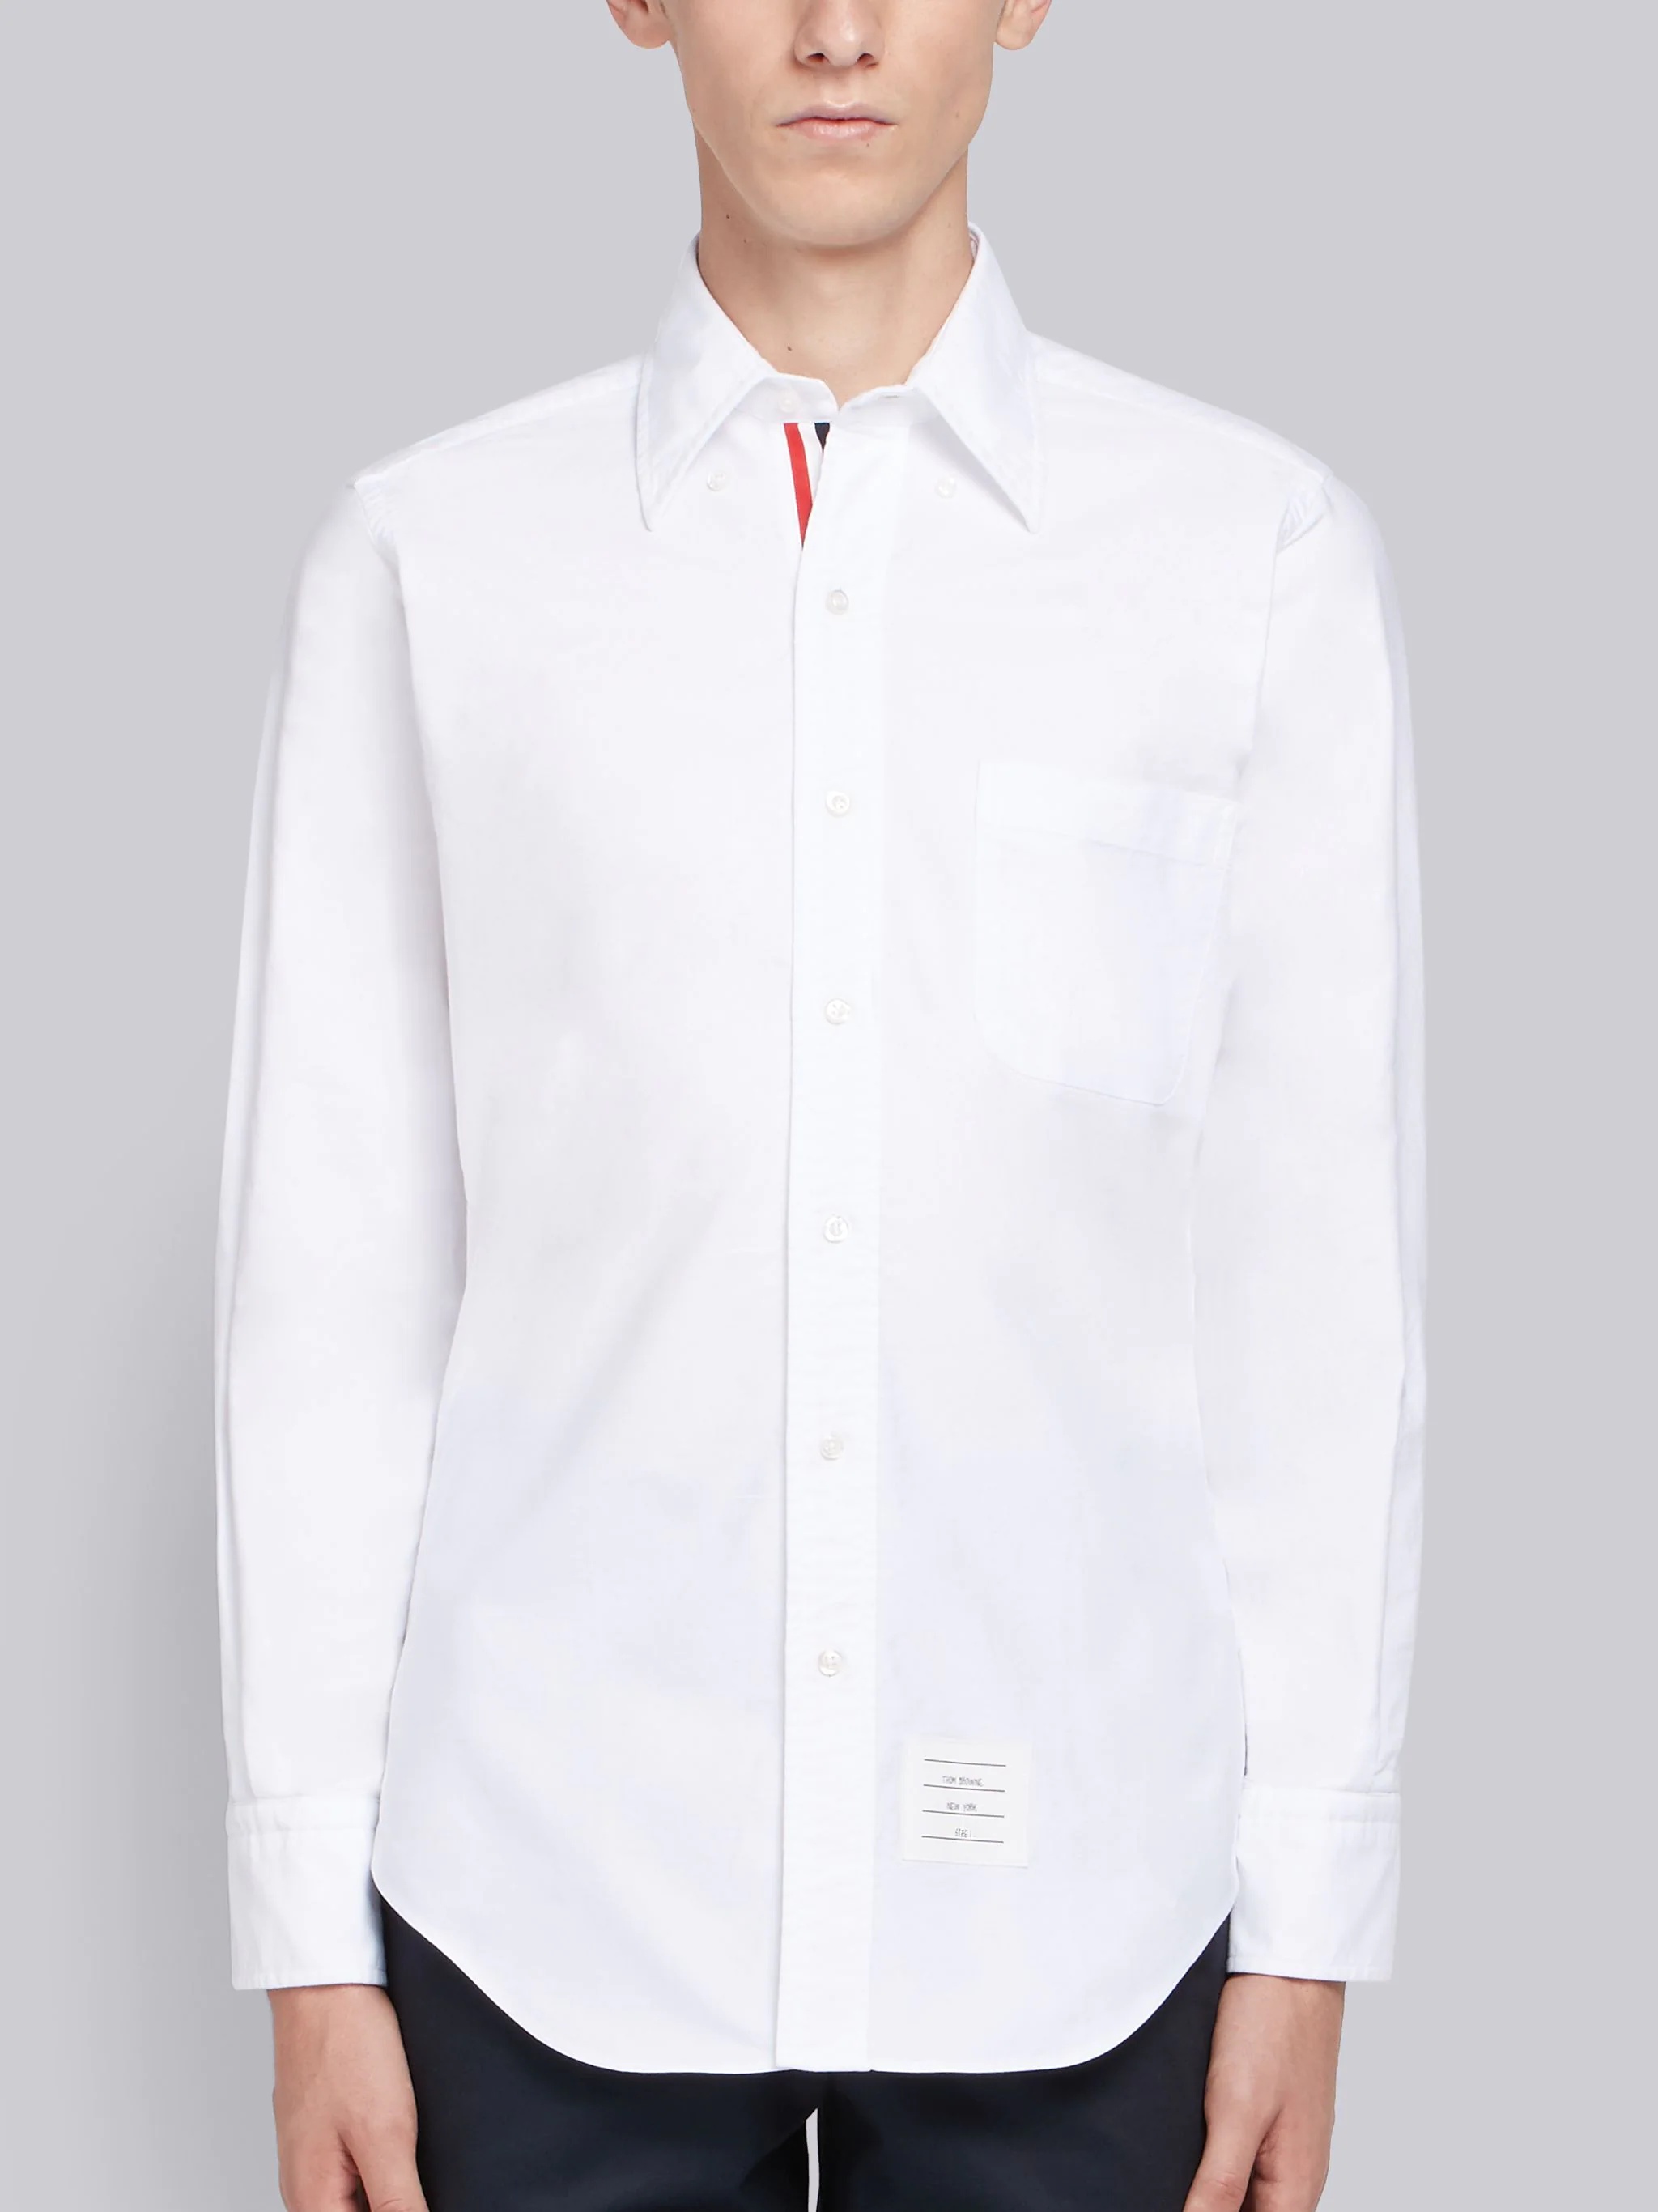 White Cotton Oxford Grosgrain Placket Shirt - 2